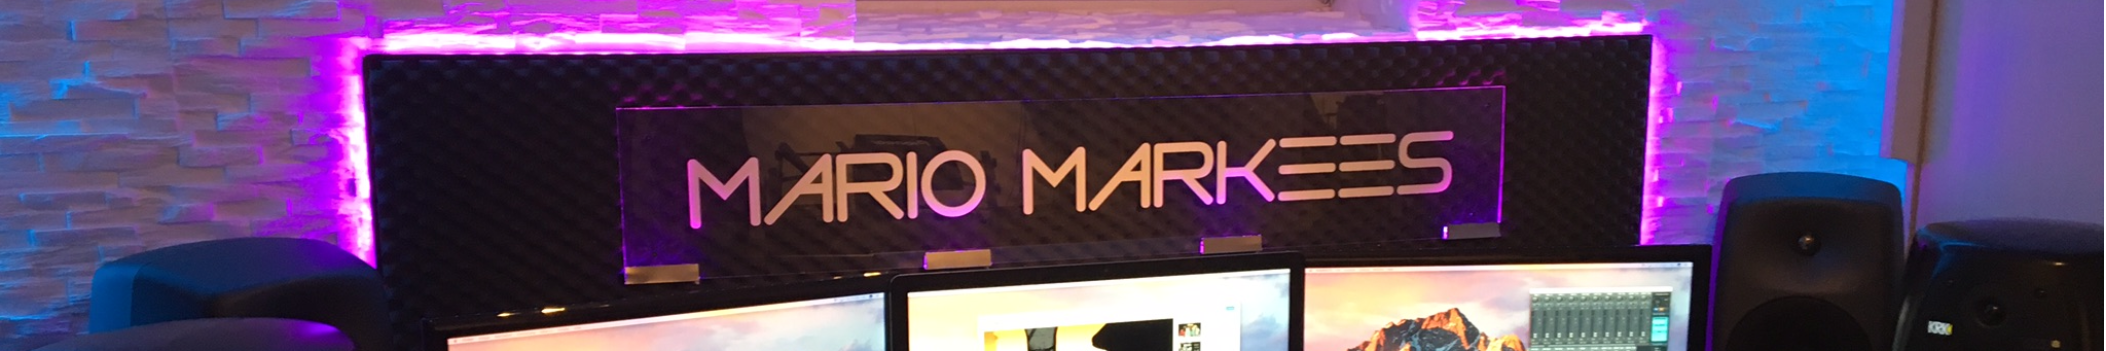 Mario Markees